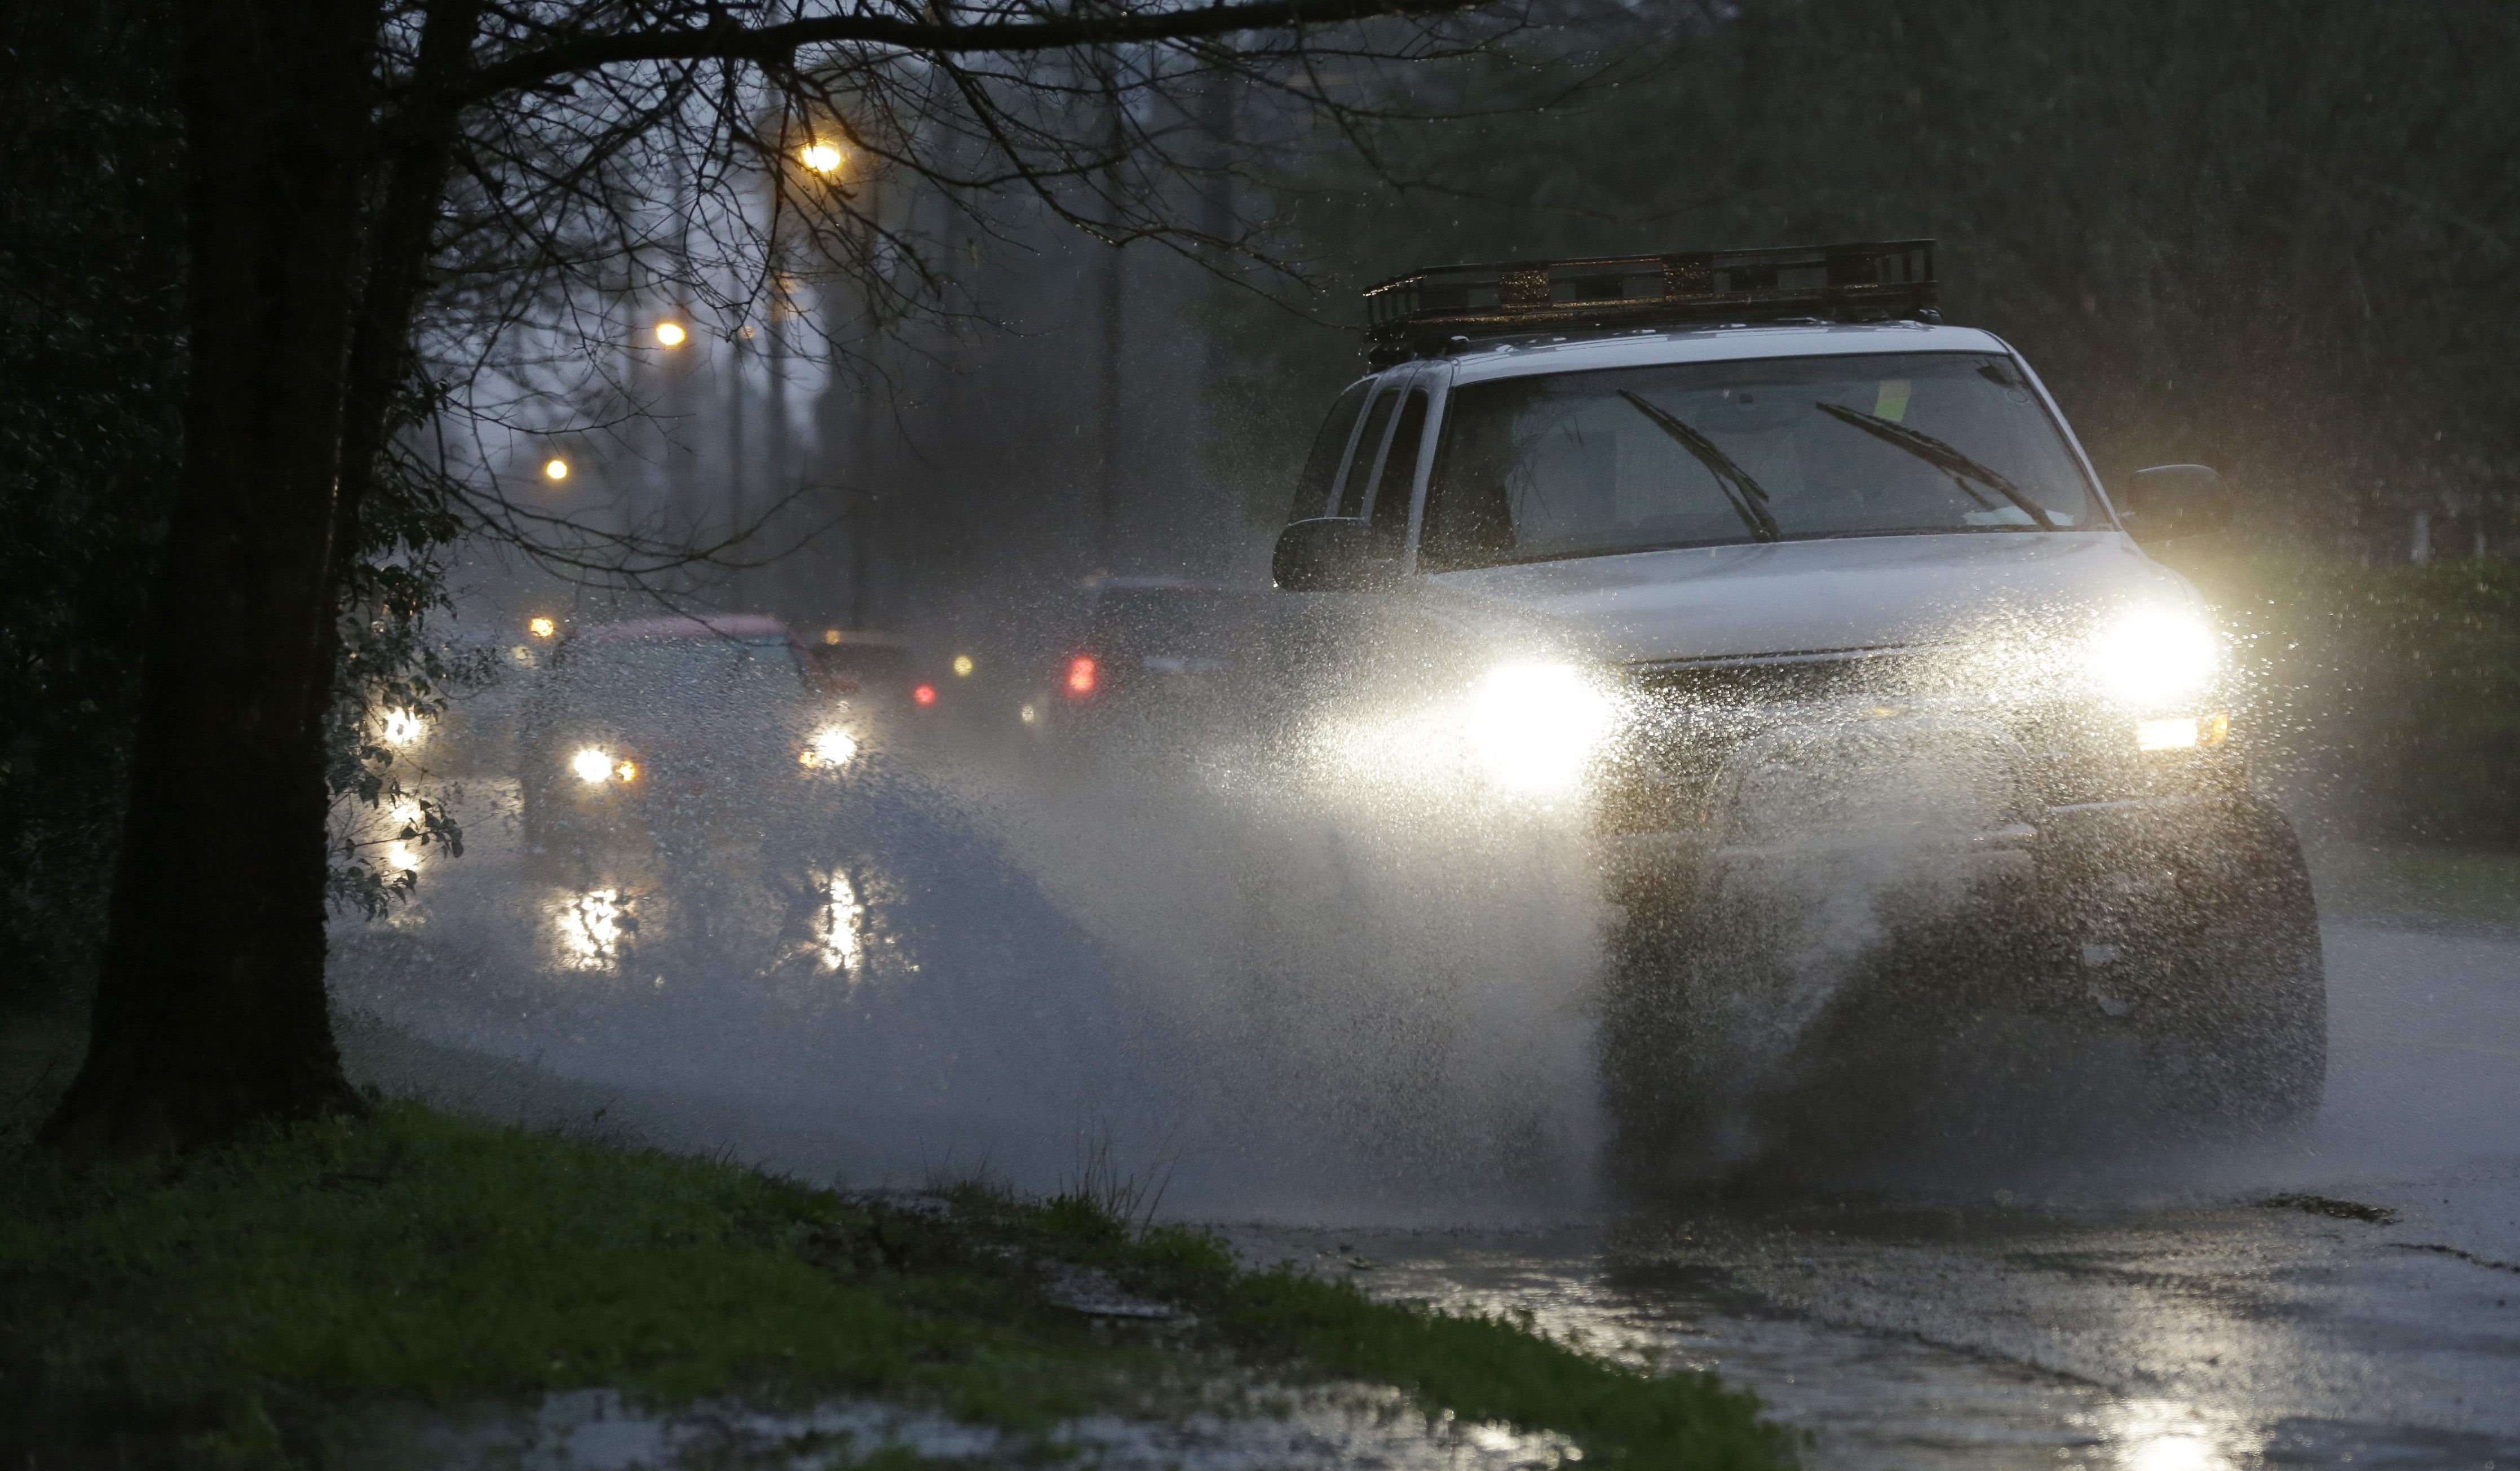 Rush hour traffic drives through minor street flooding in Montgomery, Ala., Tuesday, Feb. 12, 2013.